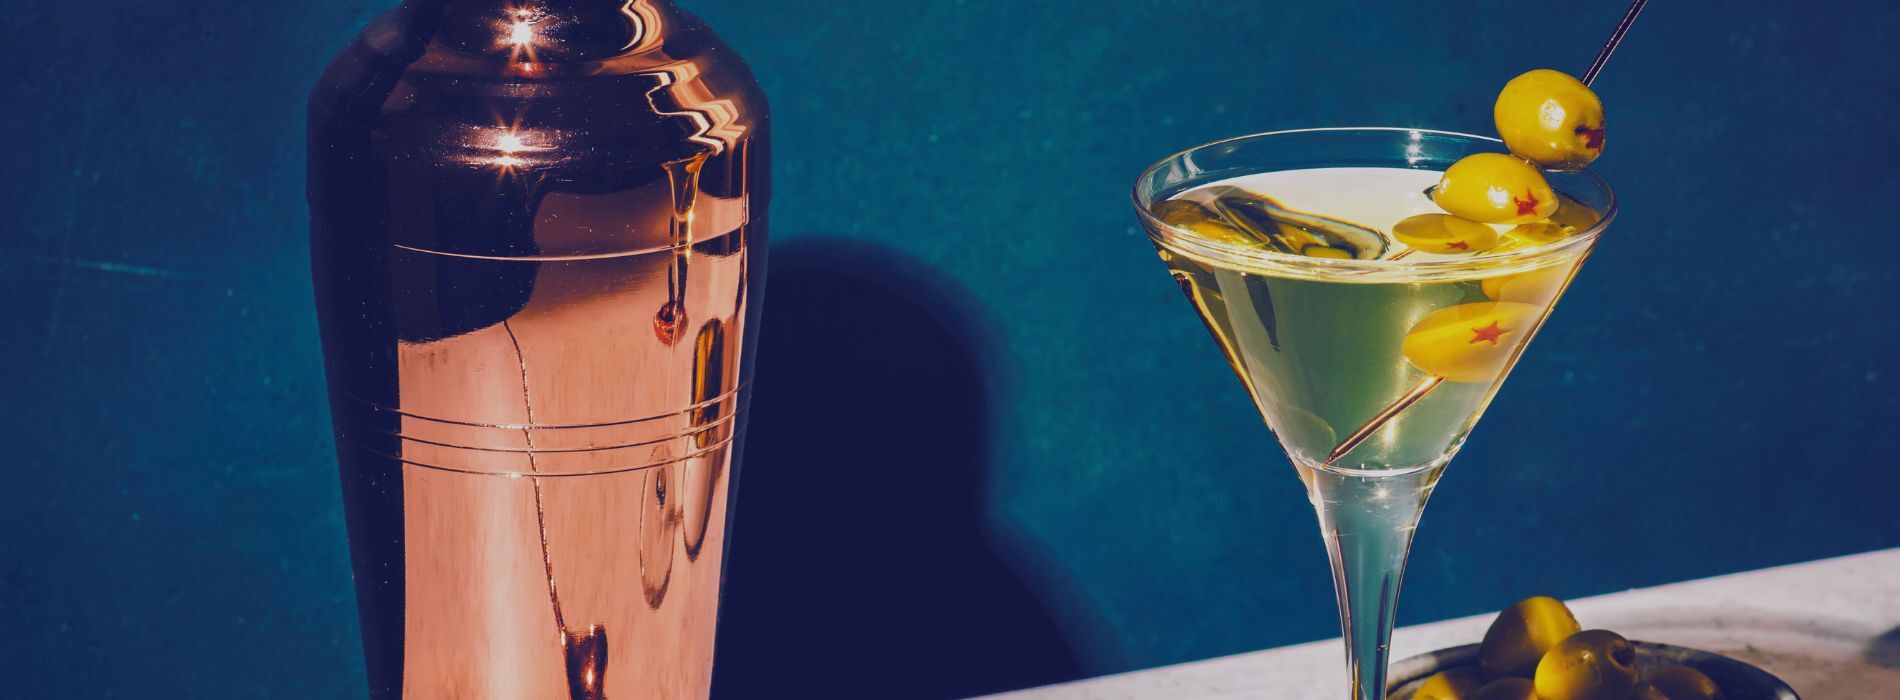 Celebrate World Martini Day